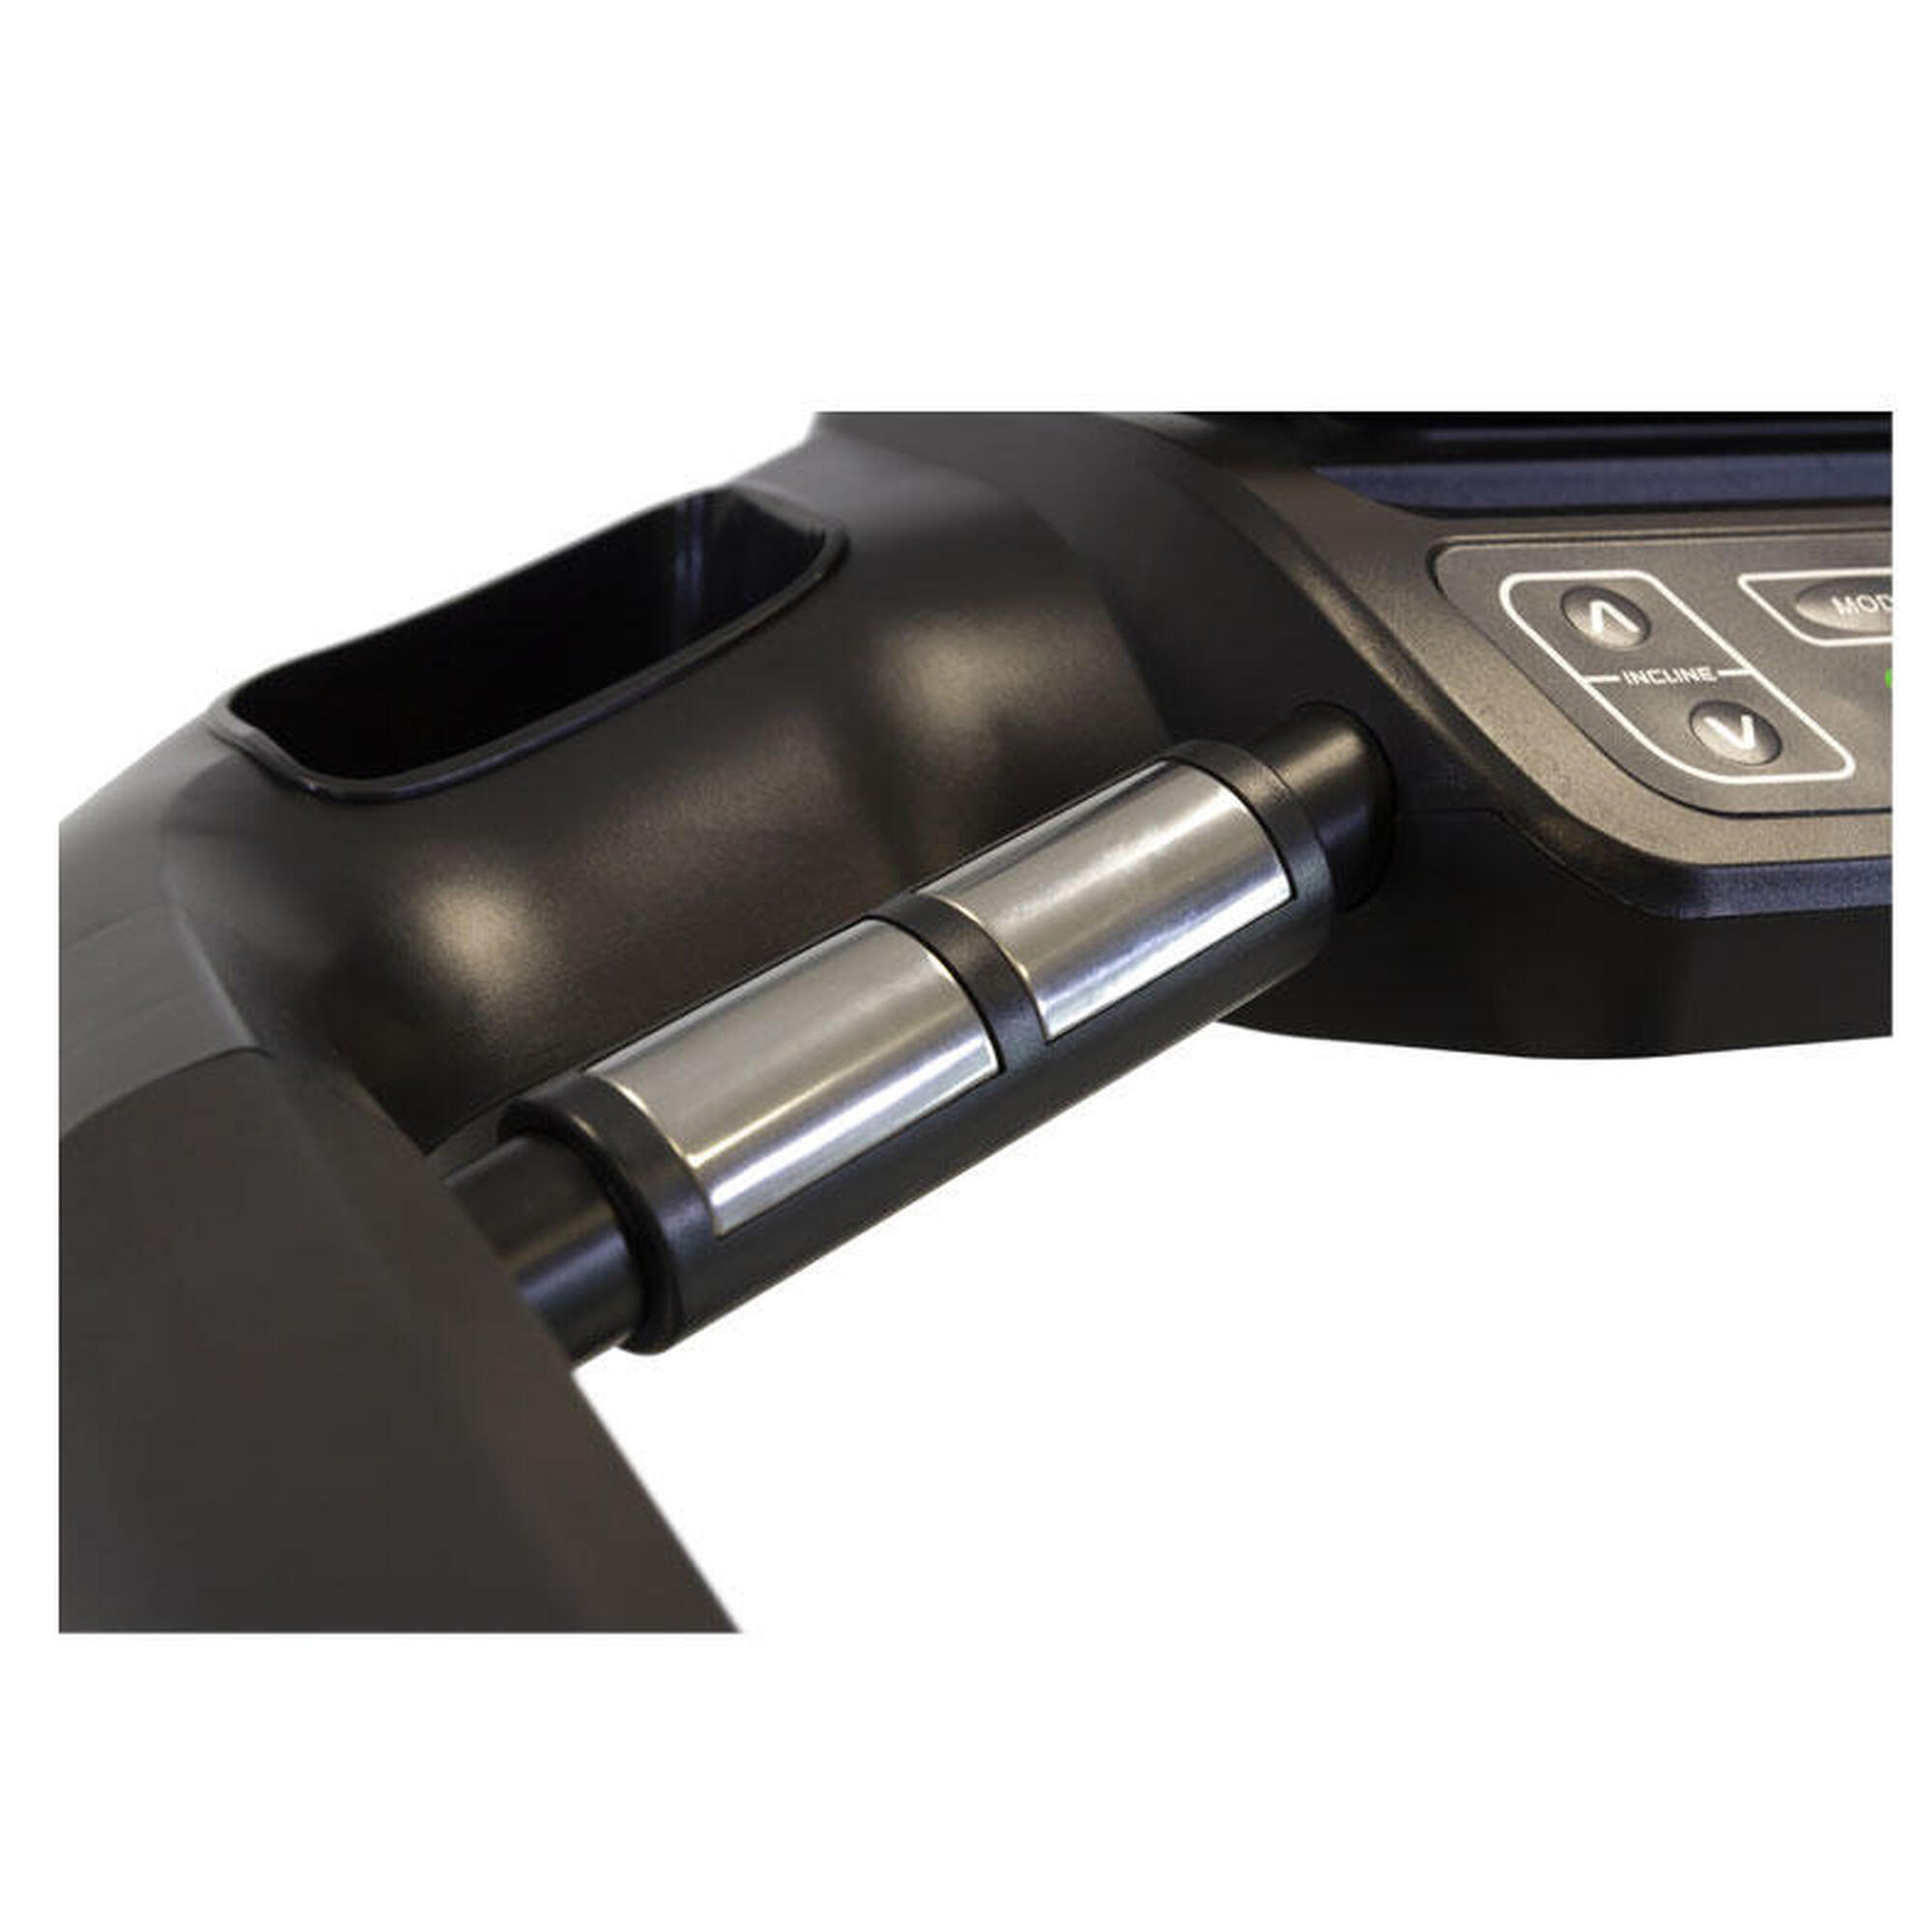 Tapis roulant - Boxster Plus II - Kinomap,Zwift - 22km/h - 150x51cm - LED